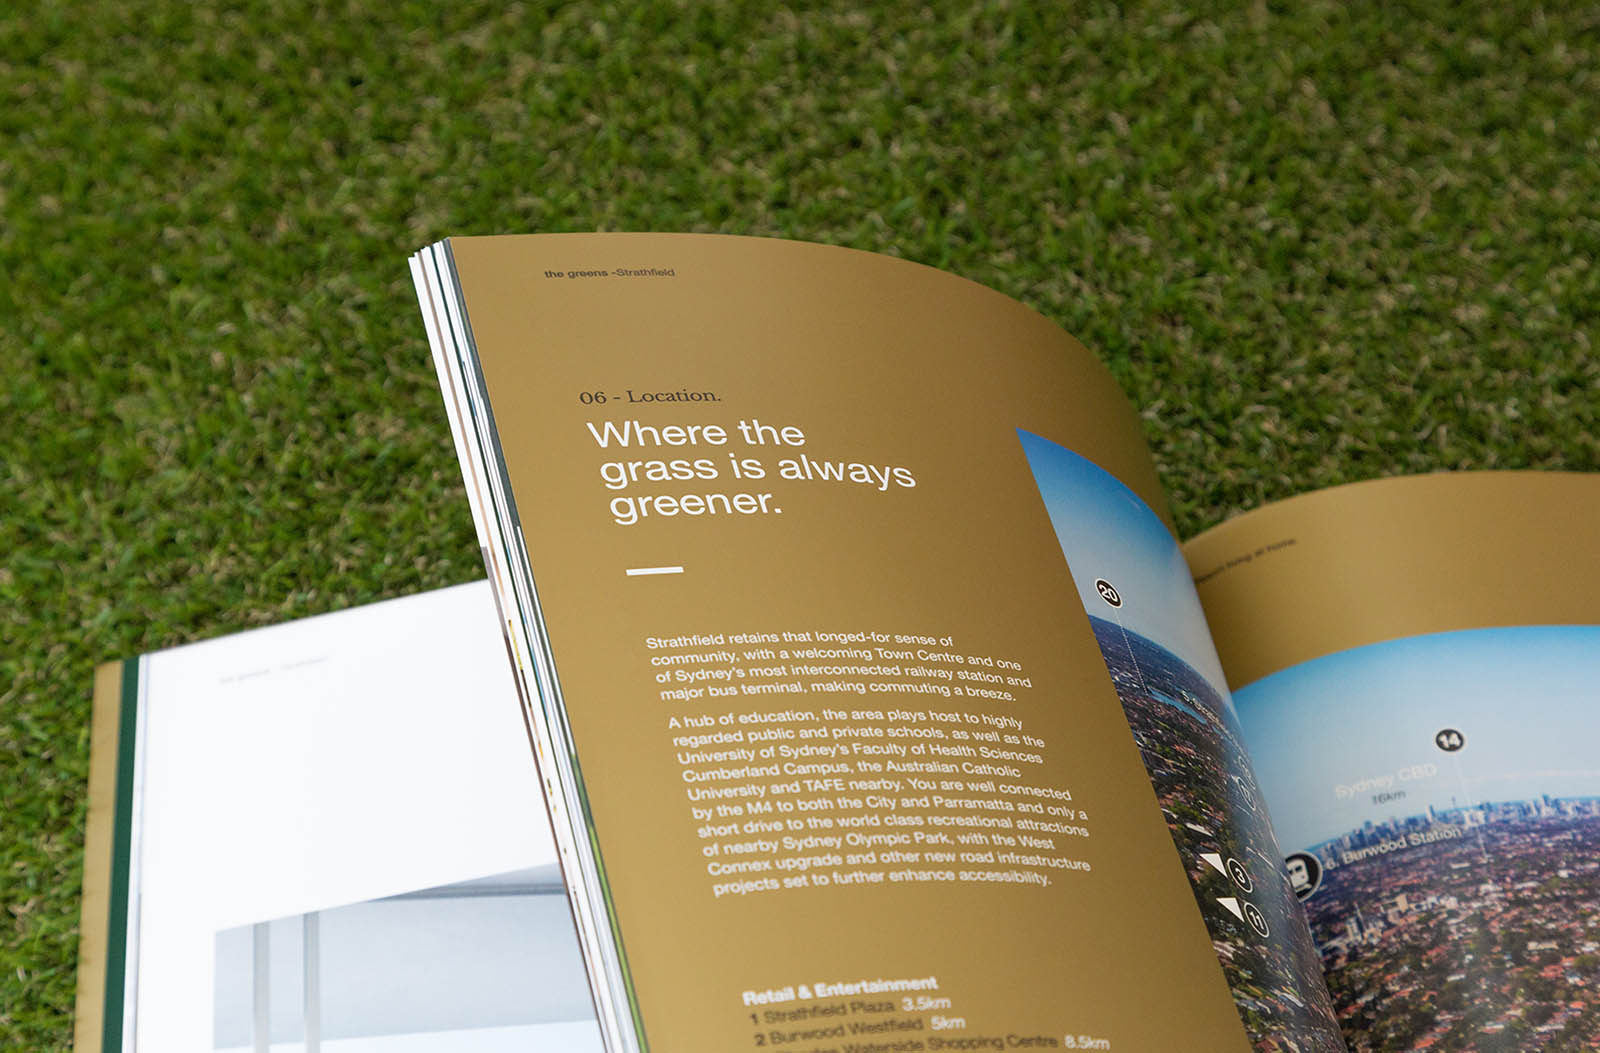 The Greens Strathfield Development. Branding by Allan Chan. Property Brochure Design.